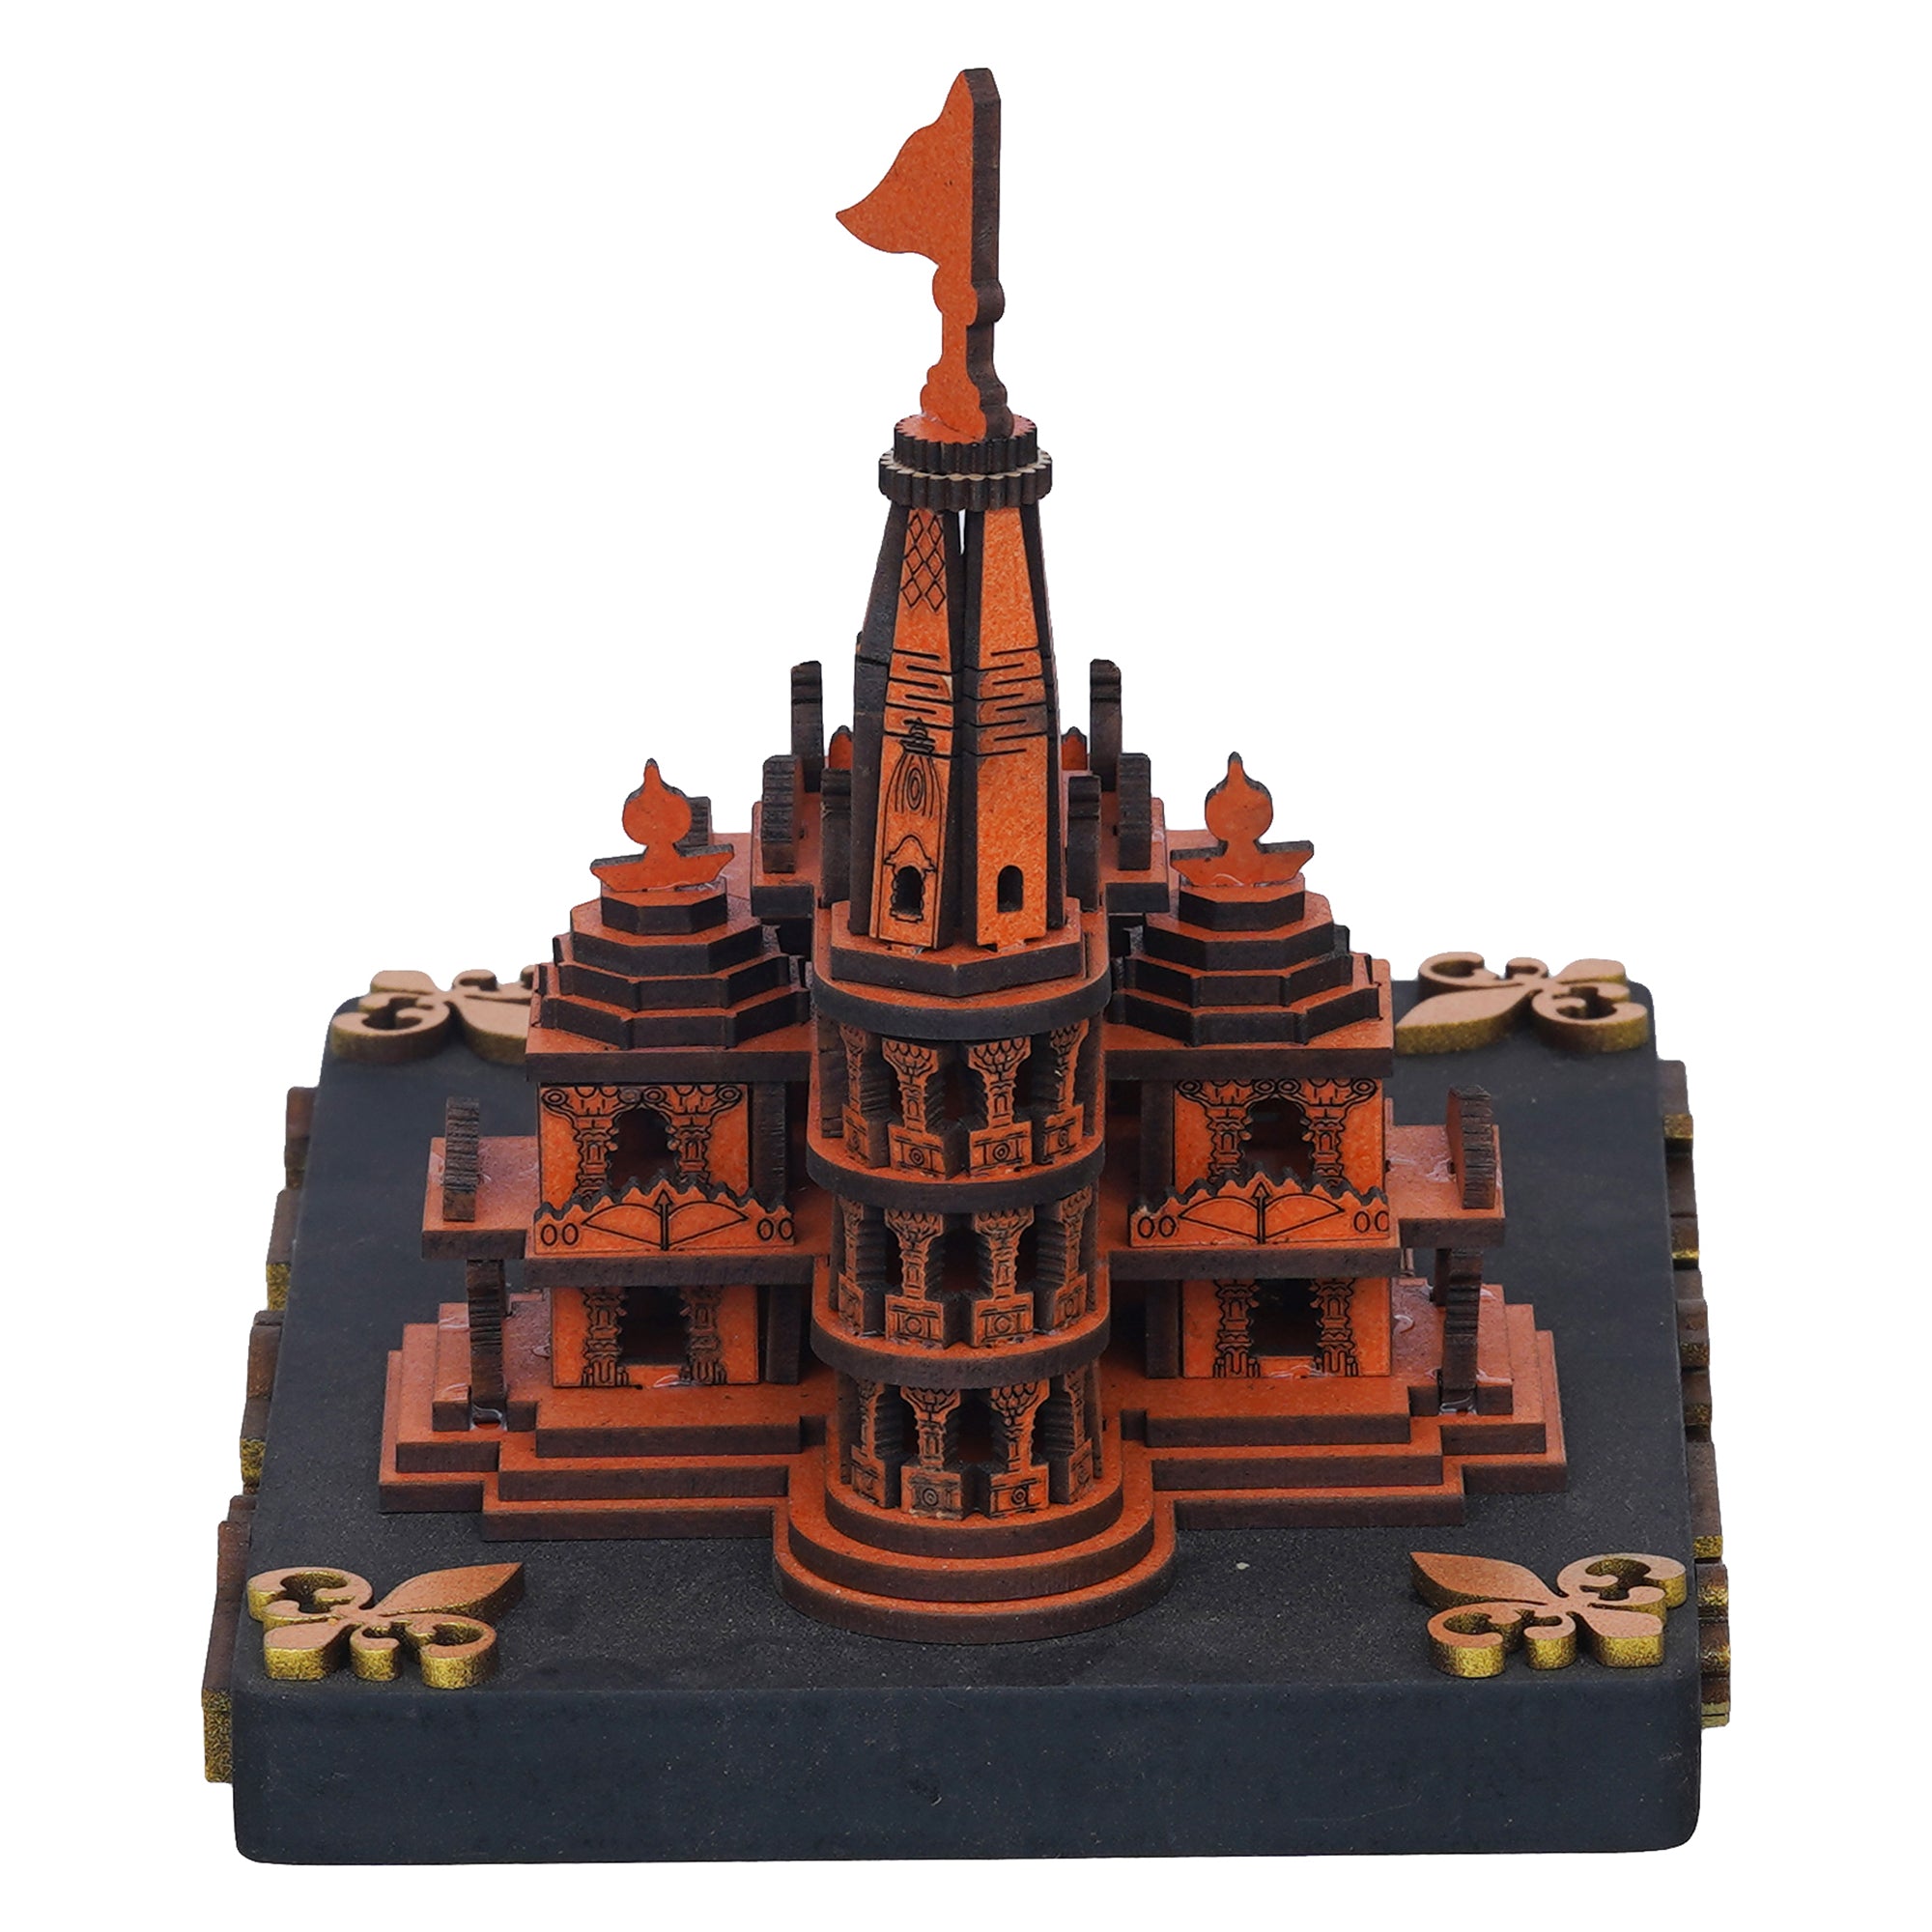 eCraftIndia Shri Ram Mandir Ayodhya Model - Wooden MDF Craftsmanship Authentic Designer Temple - Ideal for Home Temple, Decor, and Spiritual Gifting (Orange, Gold) 8